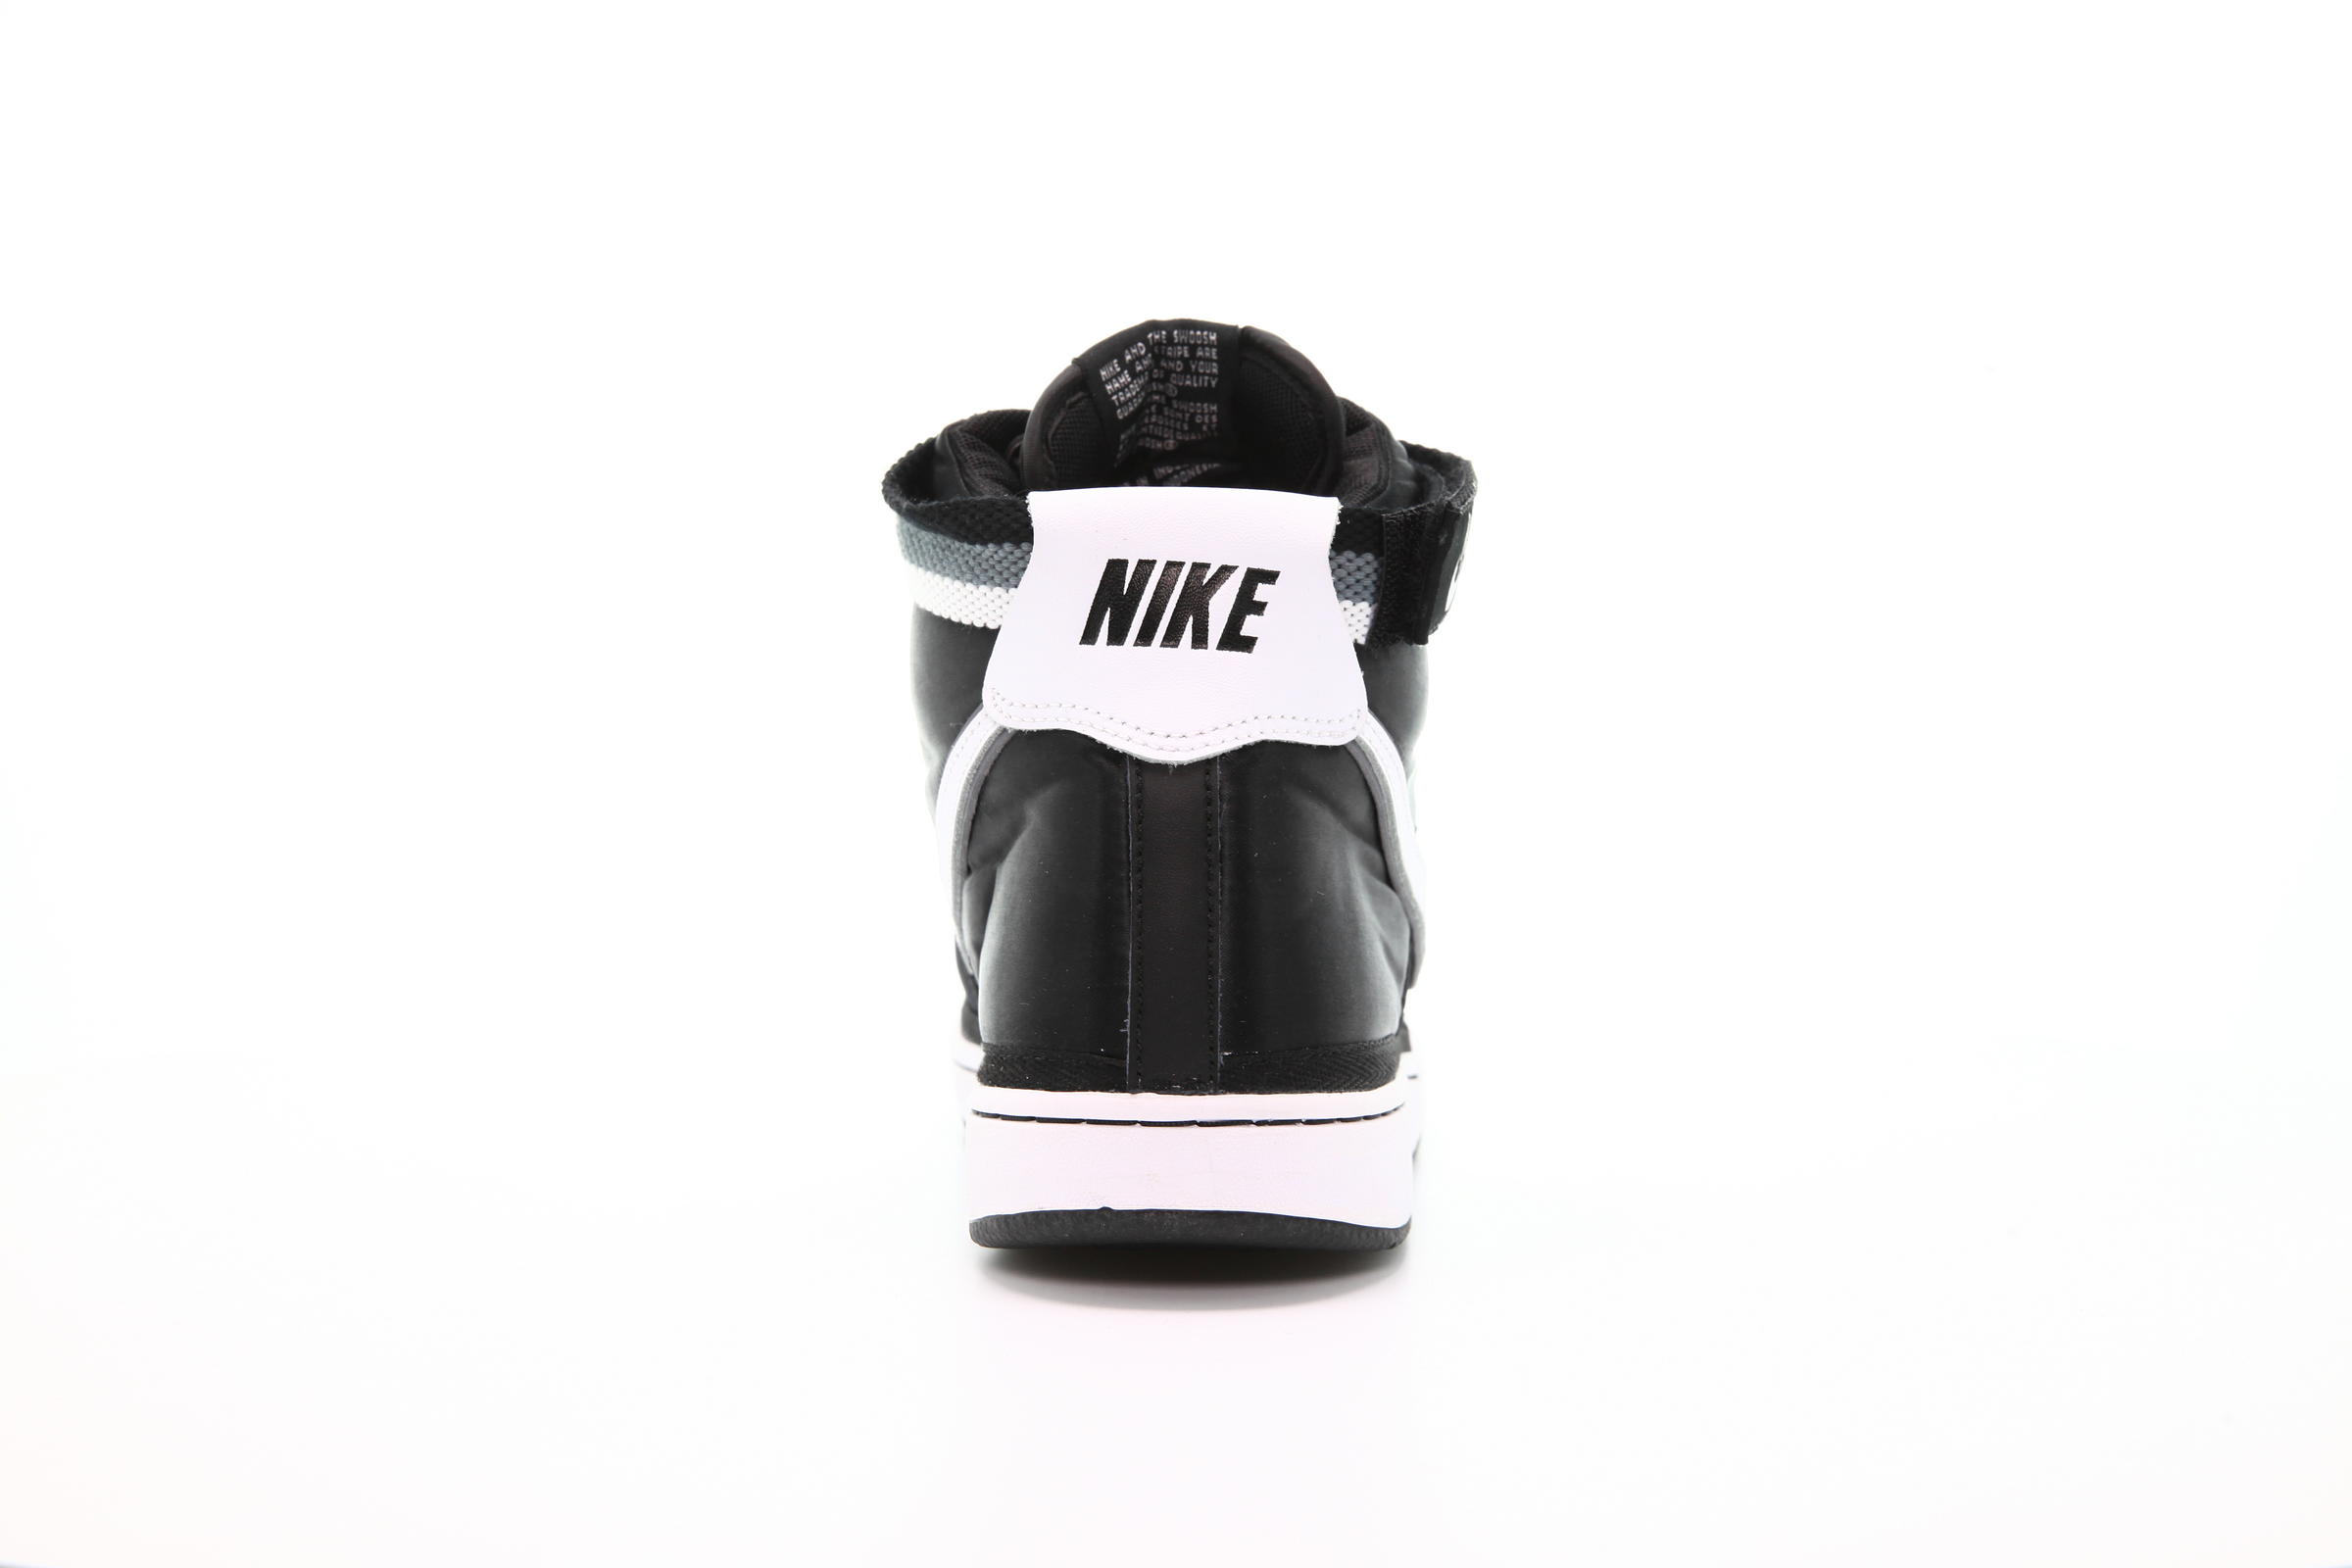 Nike Vandal High Supreme "Black"